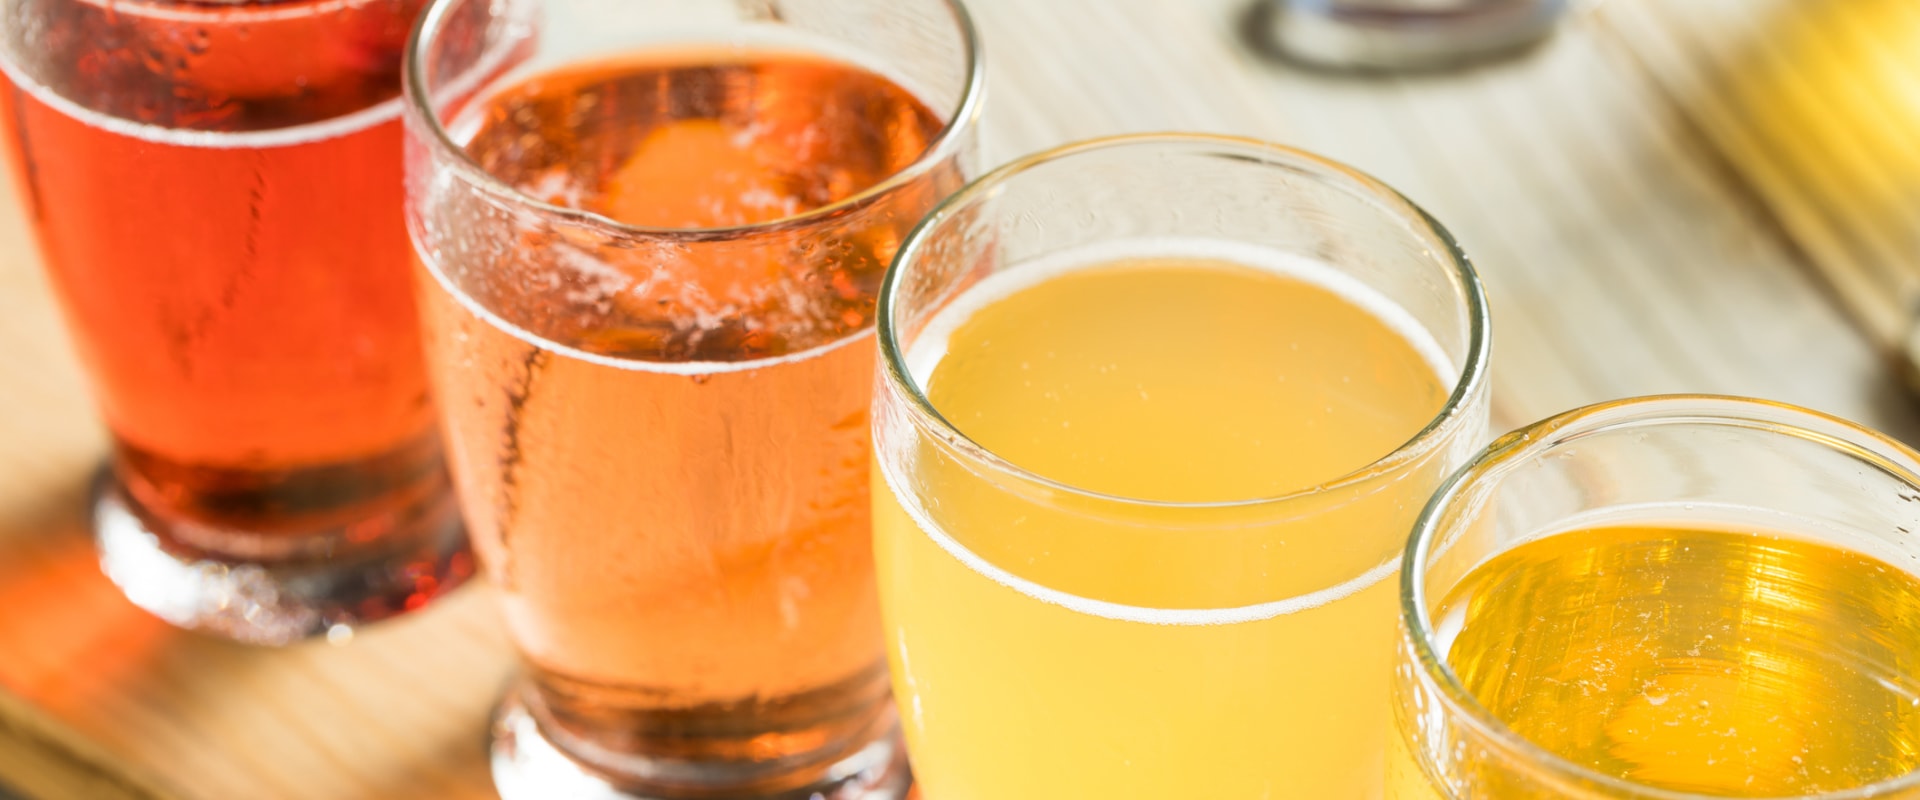 Why does cider taste better than beer?